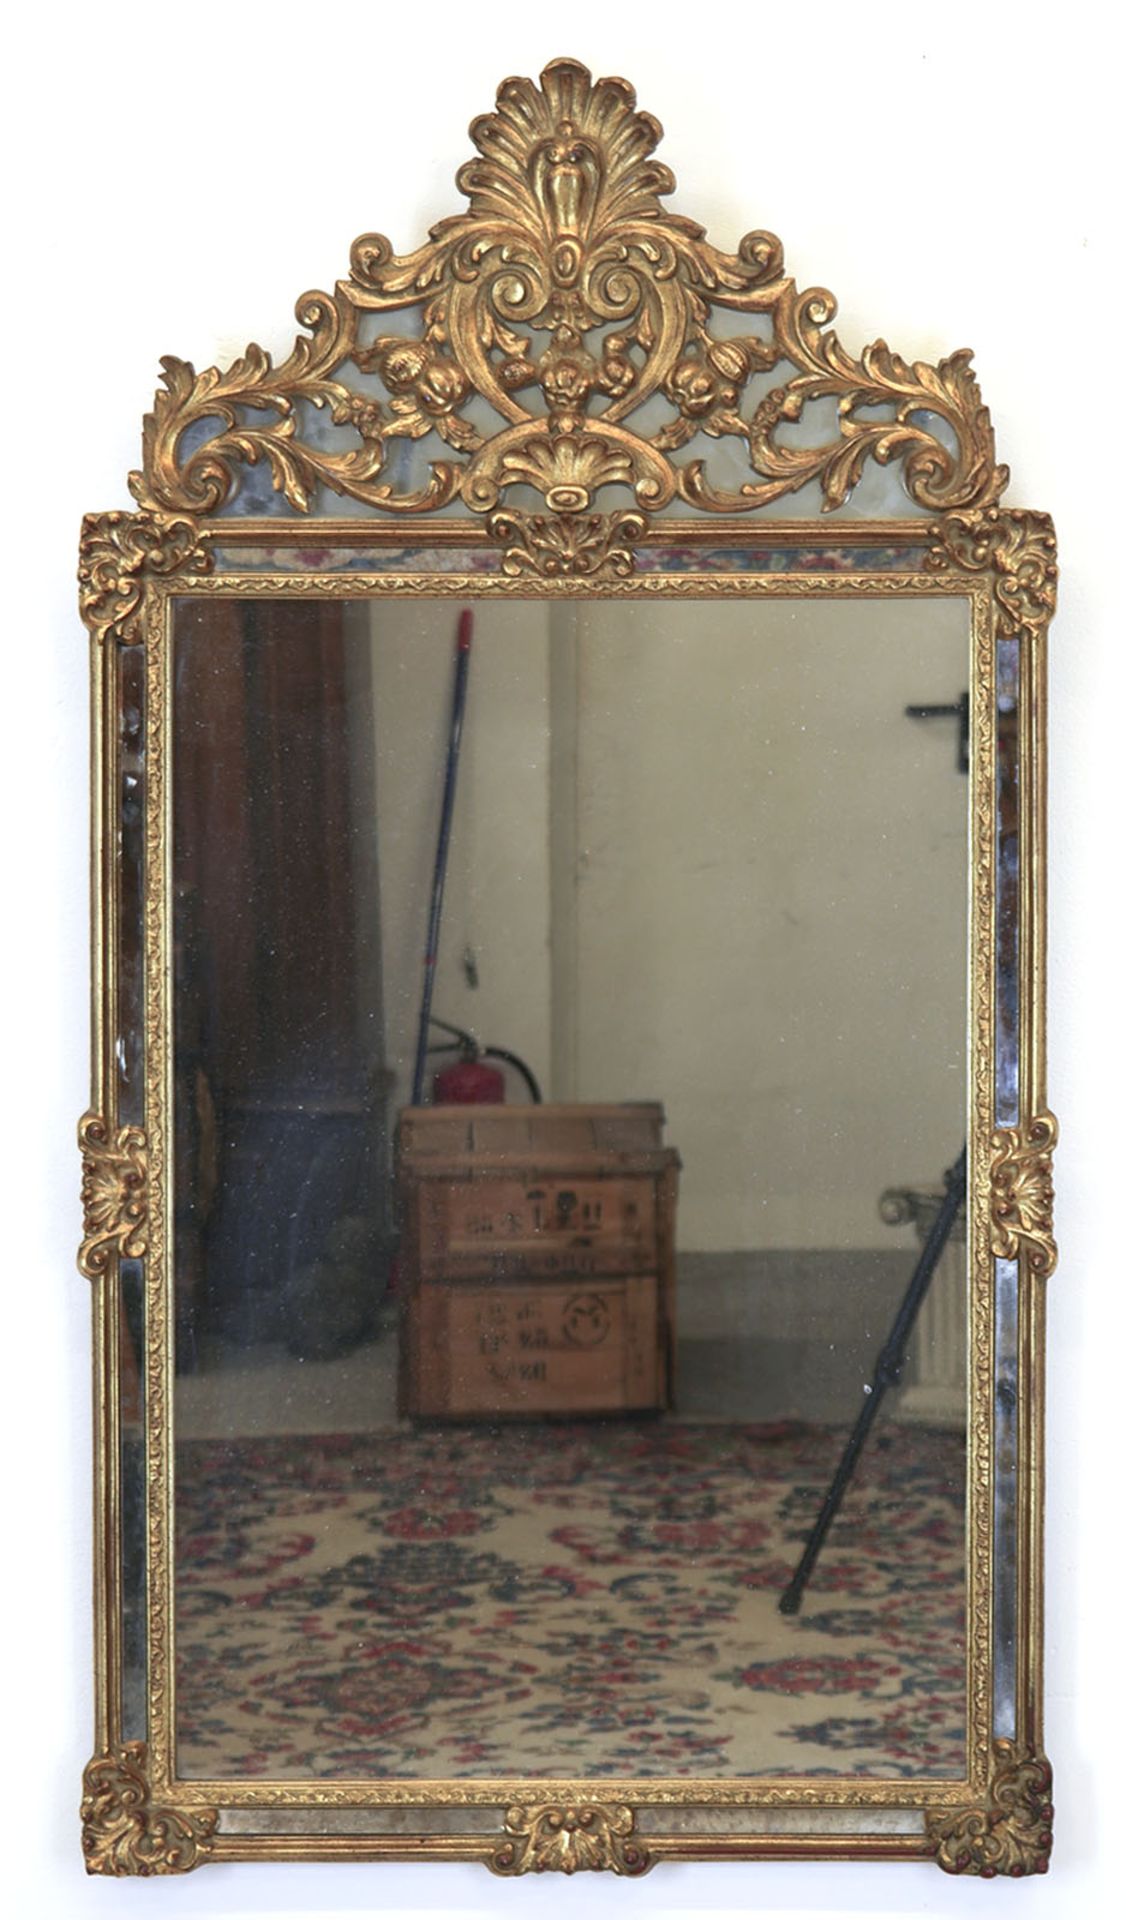 Wandspiegel im Barockstil, 20. Jh., Holz mit Stuckverzierungen, vergoldet, Randfelder und Bekrönung